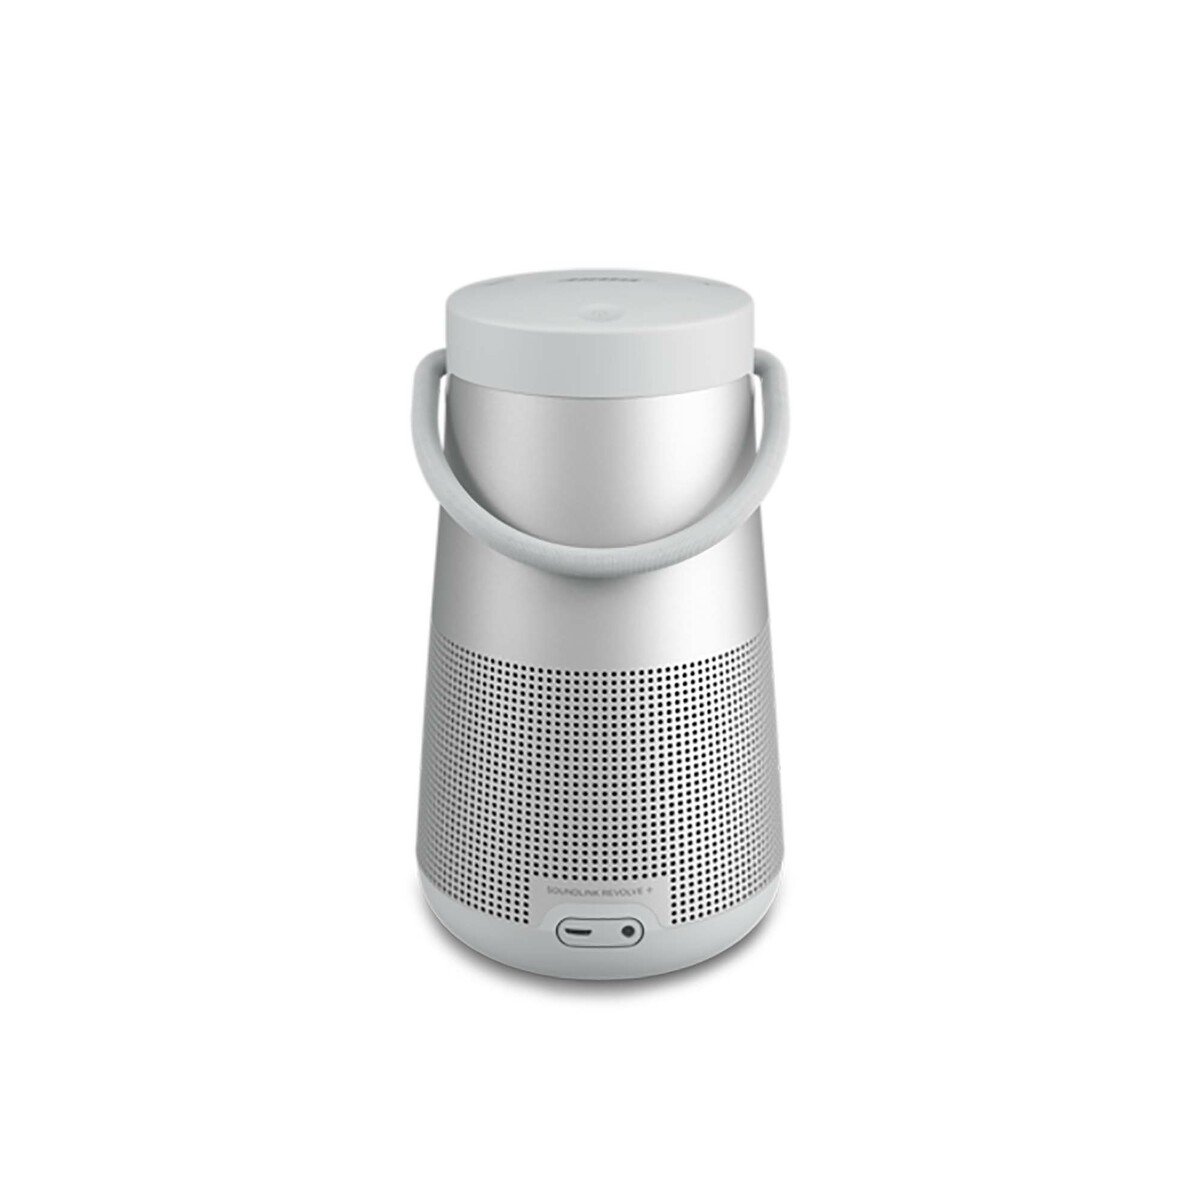 Bose Speaker SoundLink Revolve PlusII AP6 Grey